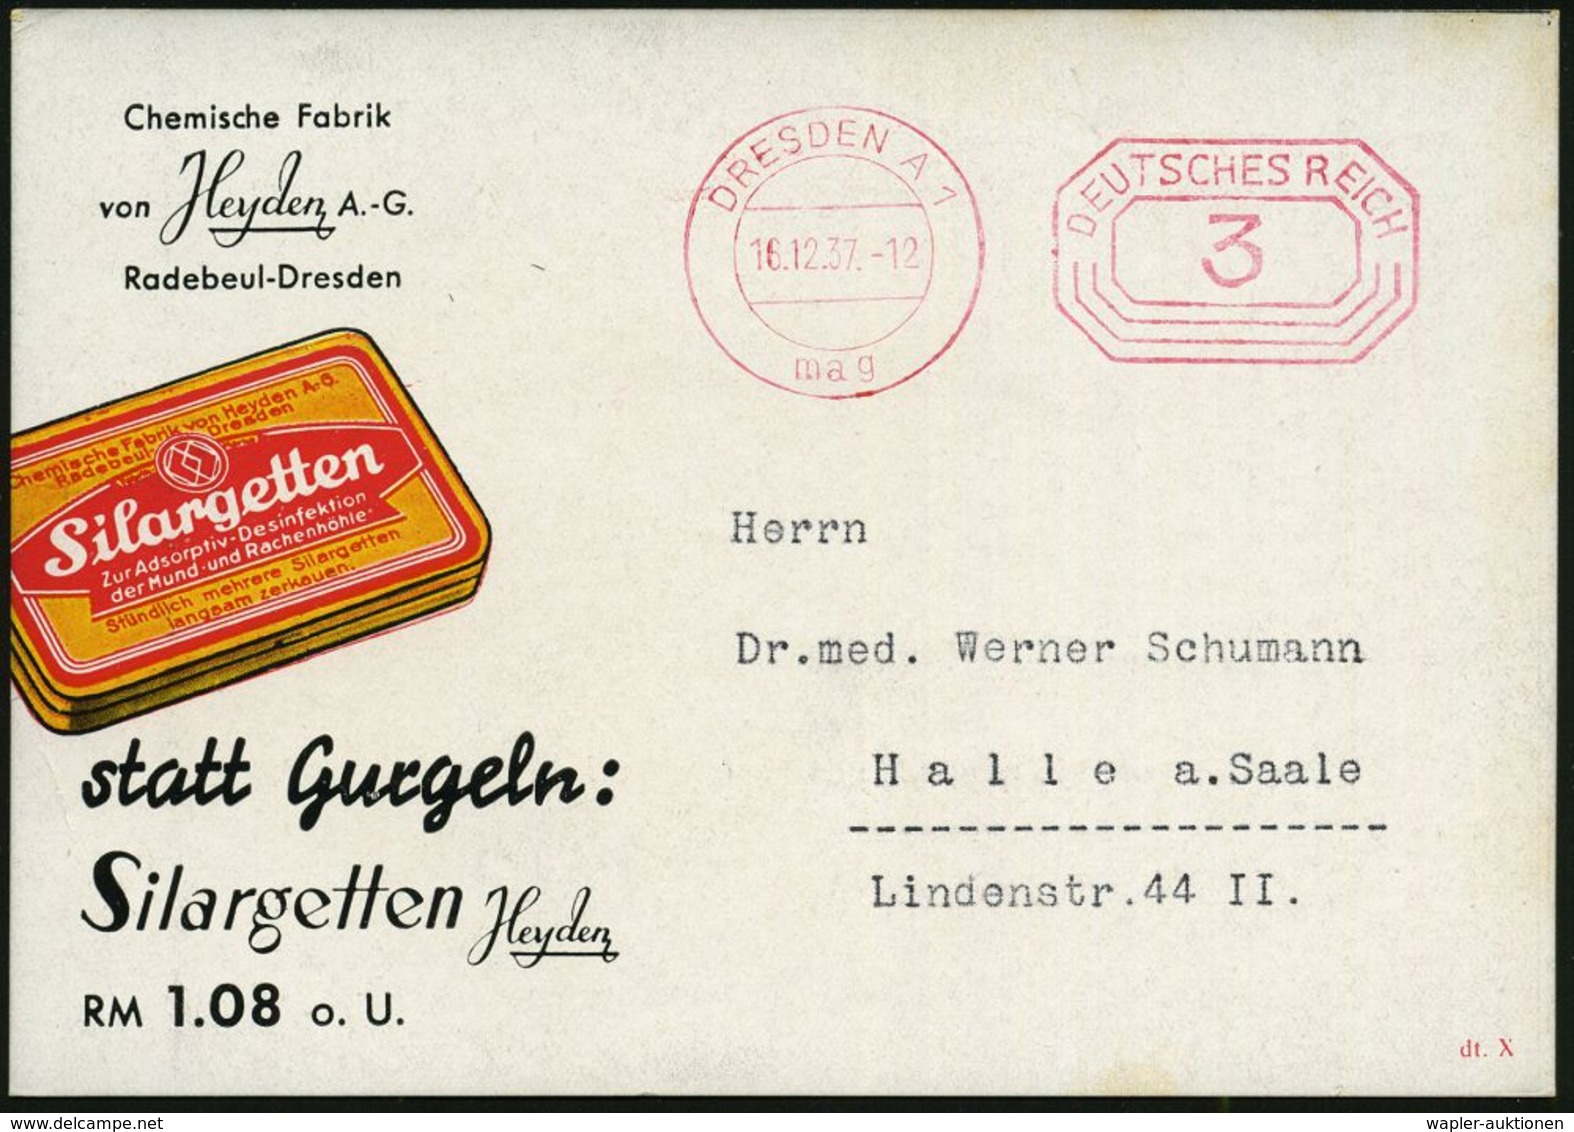 PÄDIATRIE / GYNÄKOLOGIE : DRESDEN A 1/ Mag 1937 (16.12.) PFS 3 Pf. Auf Color-Reklame-Kt.: Silargetten Heyden AG. (Pharma - Krankheiten